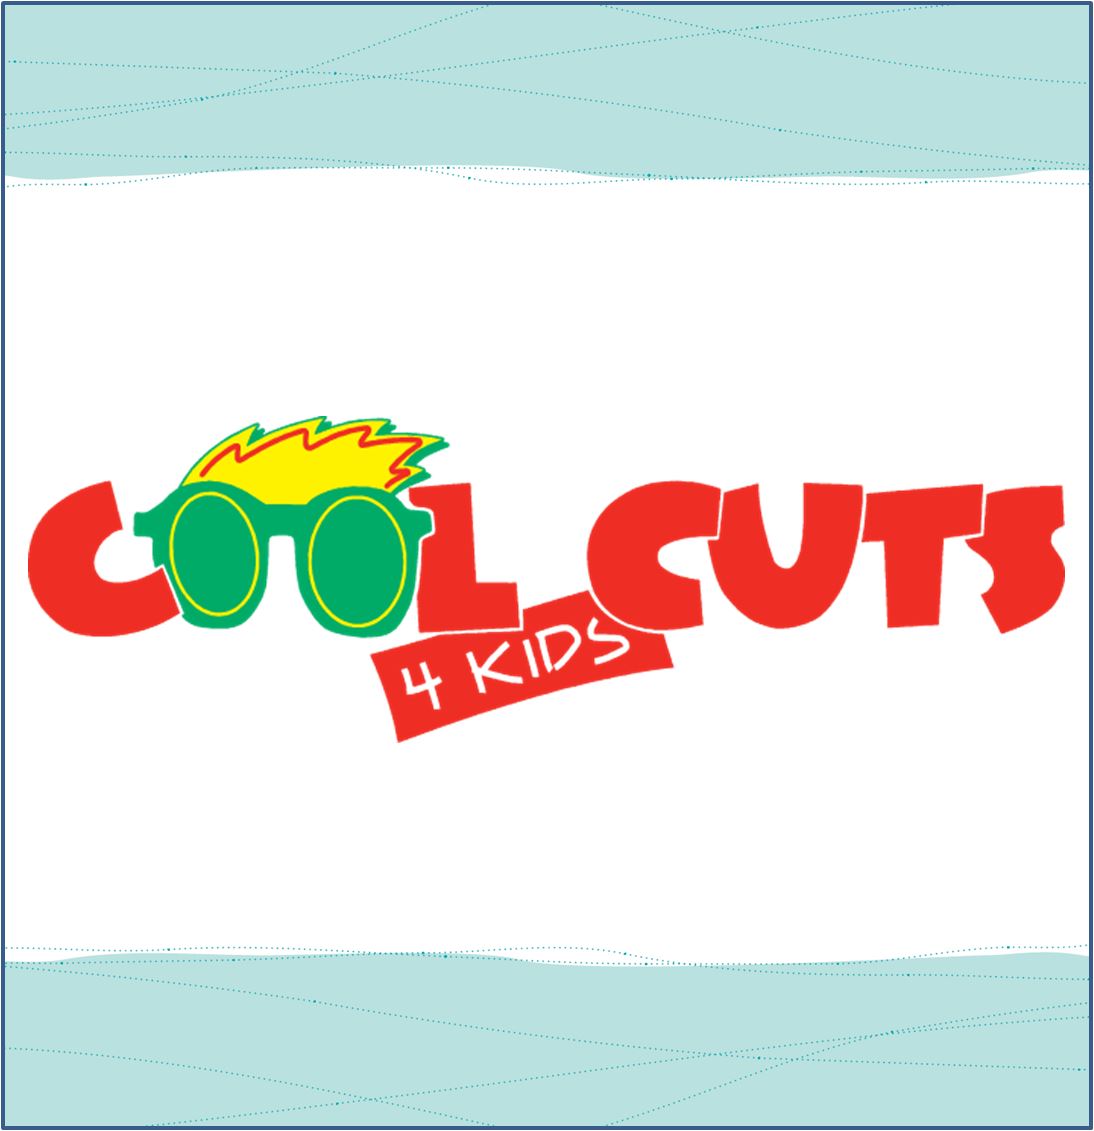 Cool Cuts 4 Kids - Mcallen Nolana